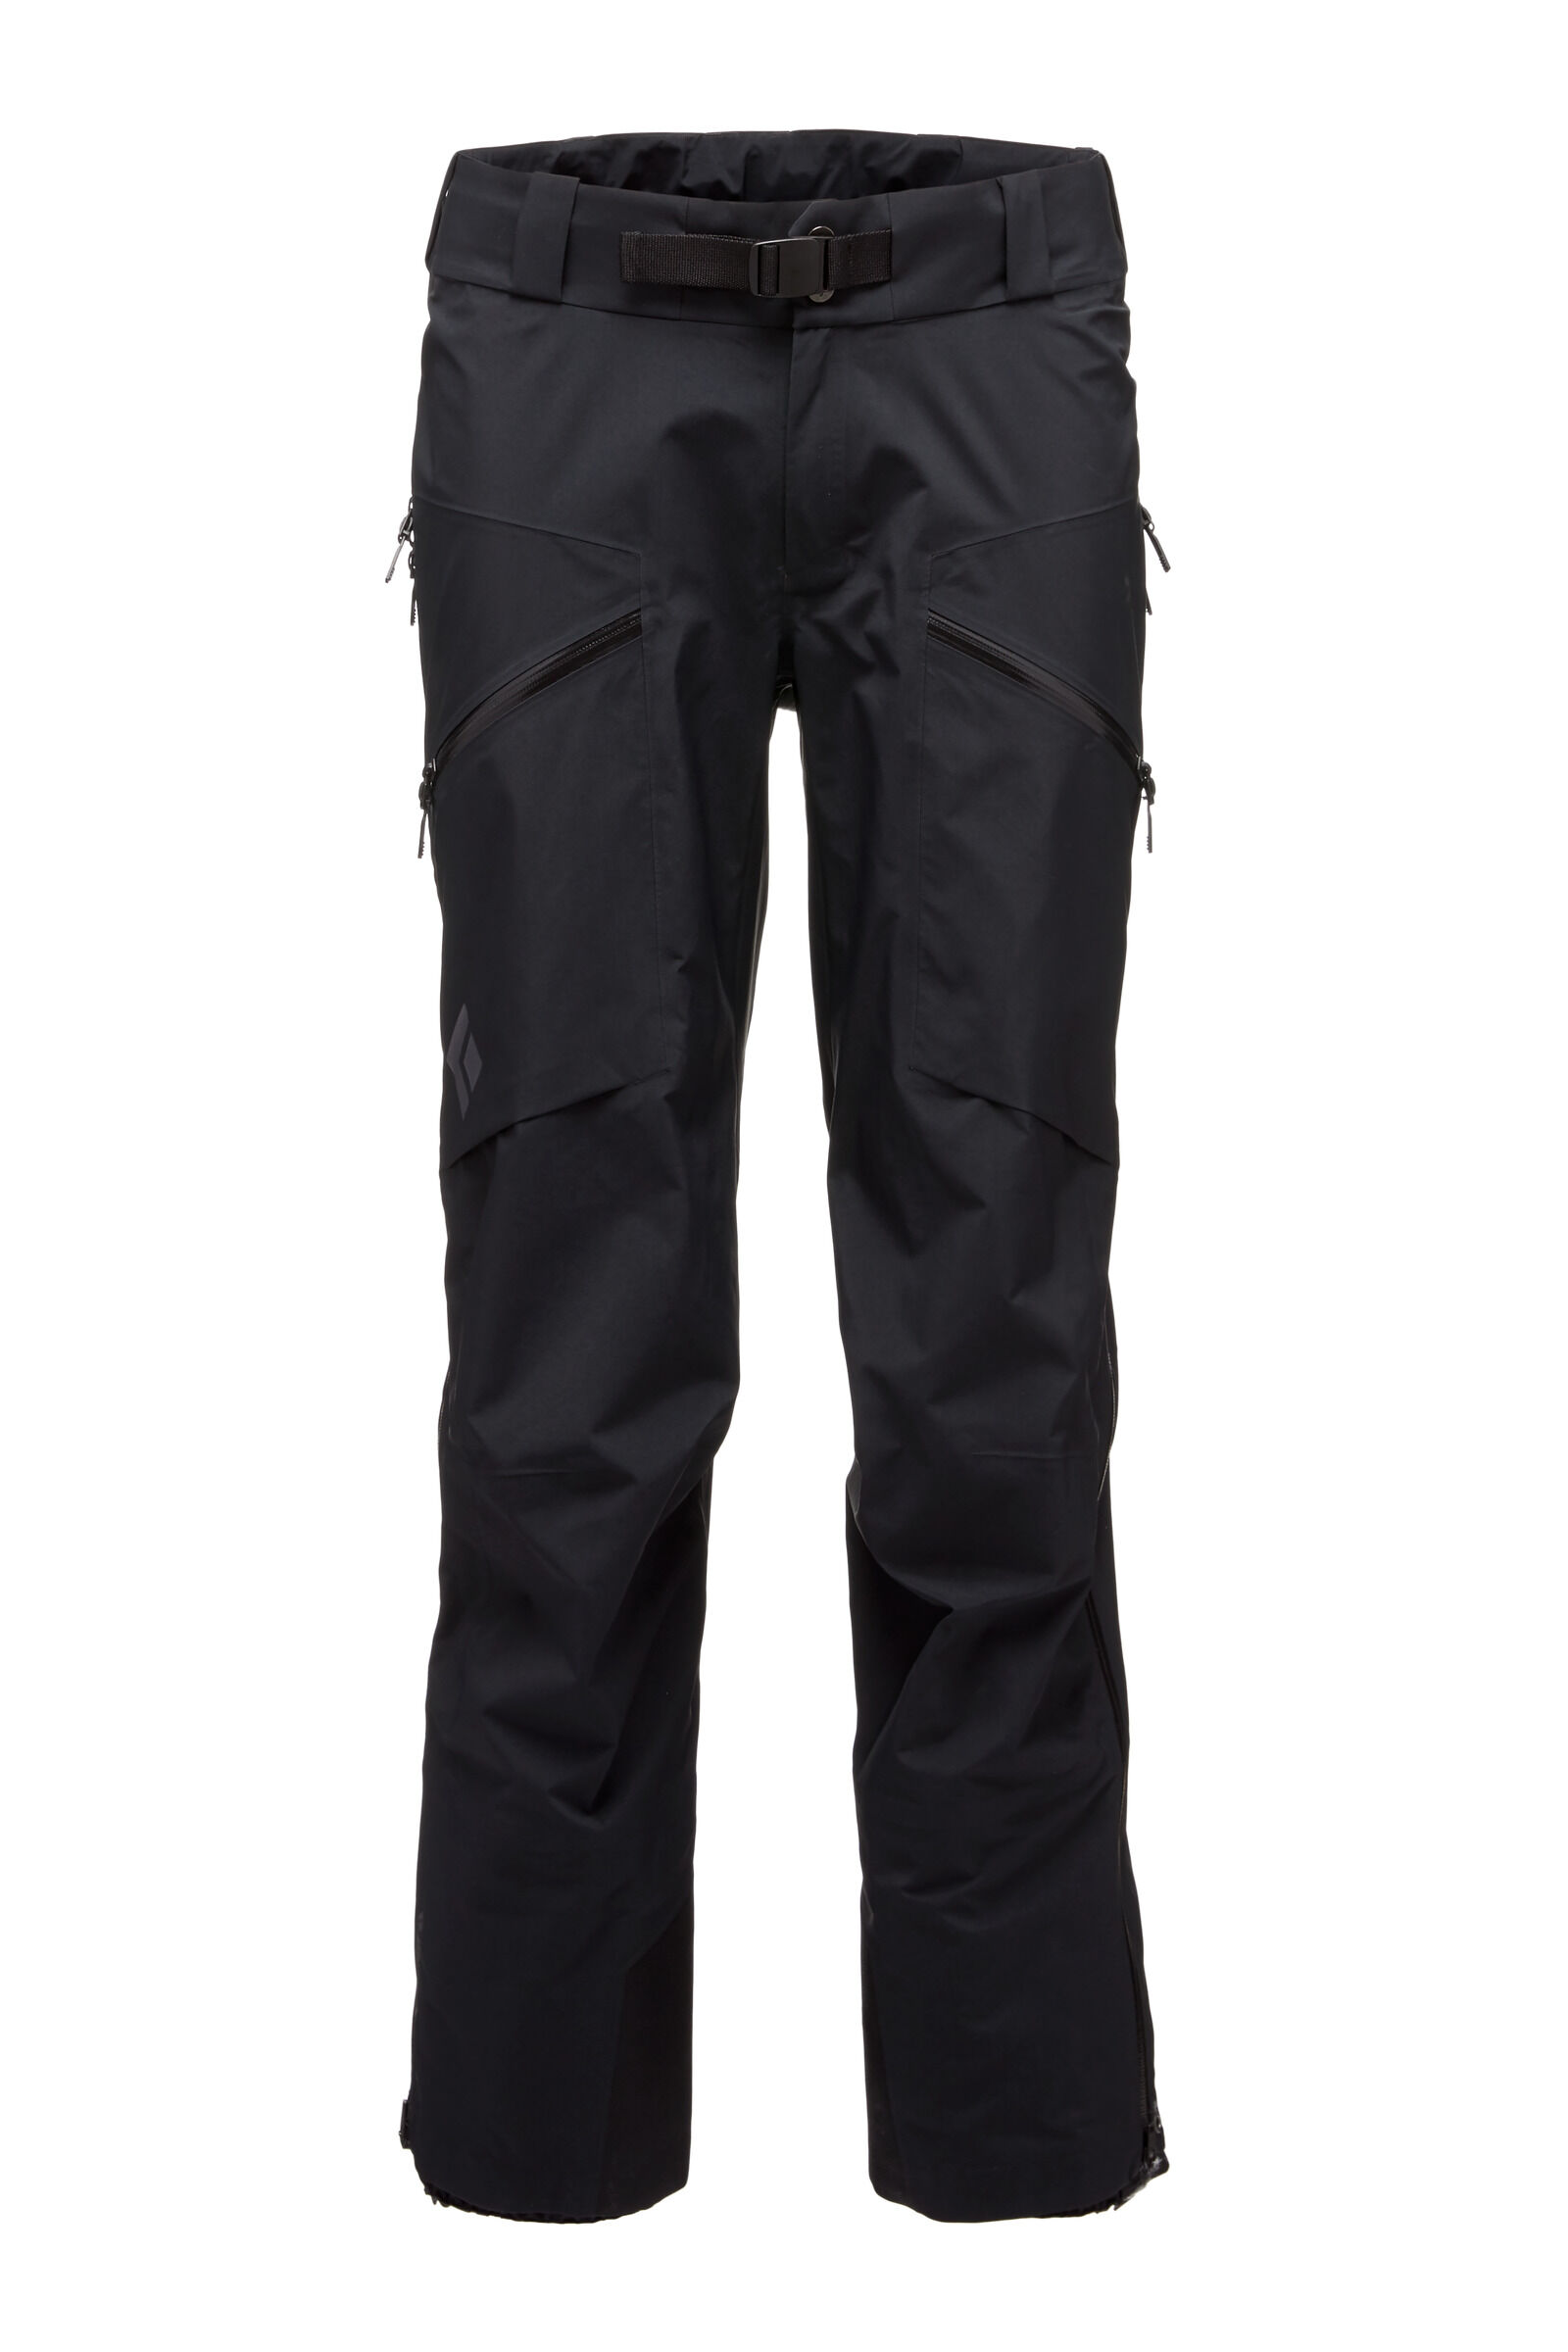 Black Diamond M Sharp End Shell Pants - Pantalon imperméable homme | Hardloop